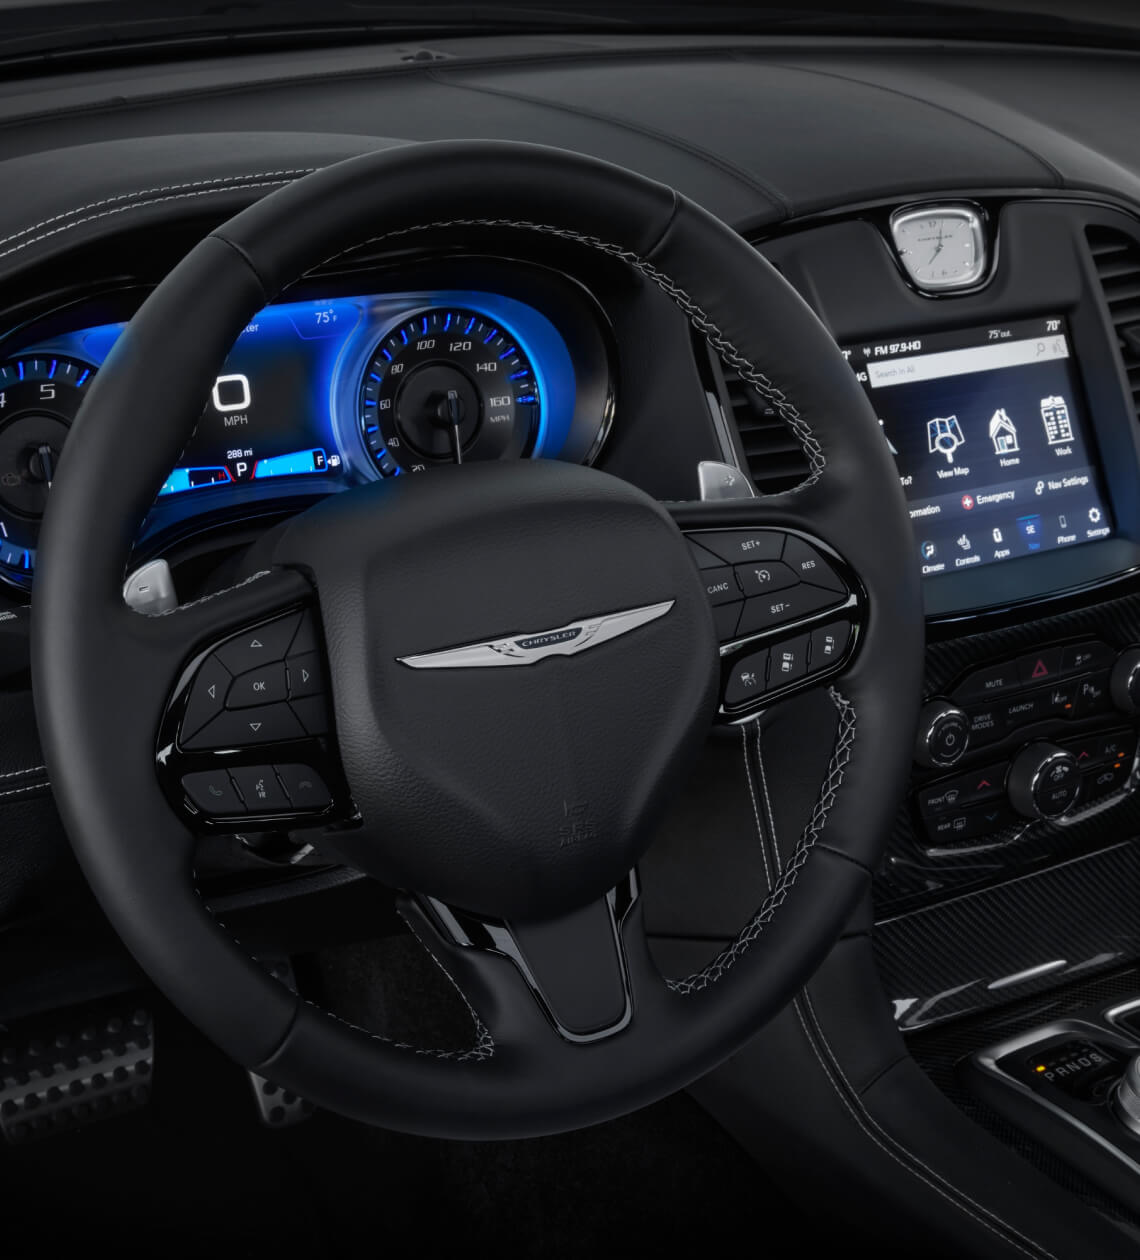 2023 Chrysler 300 Interior: Safety Systems